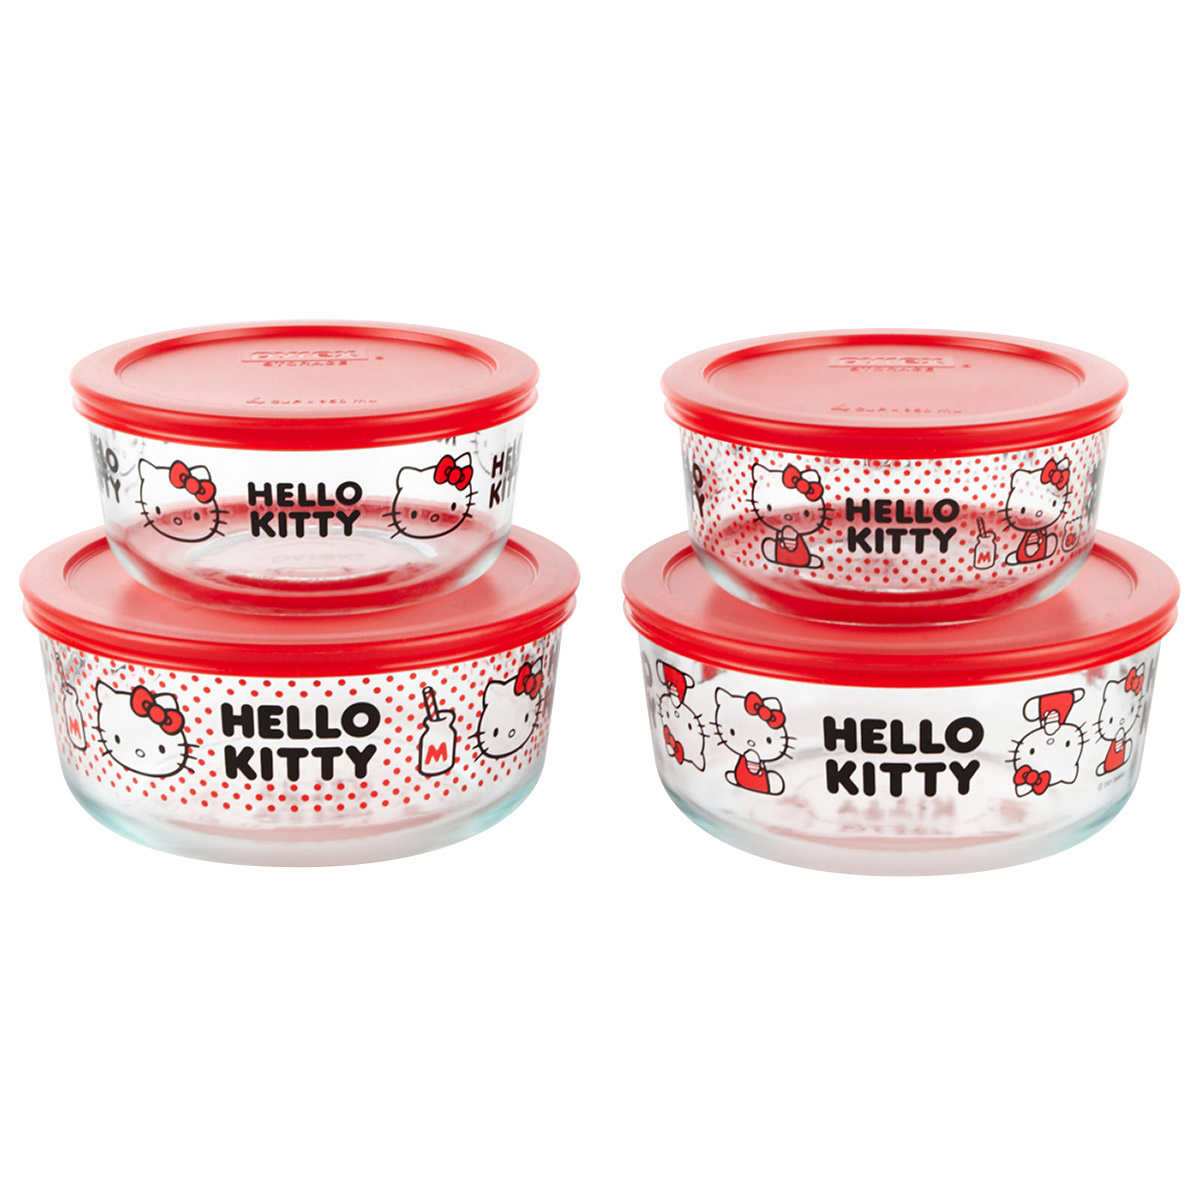 Hello Kitty Ceramic Jewelry Boxes & Organizers